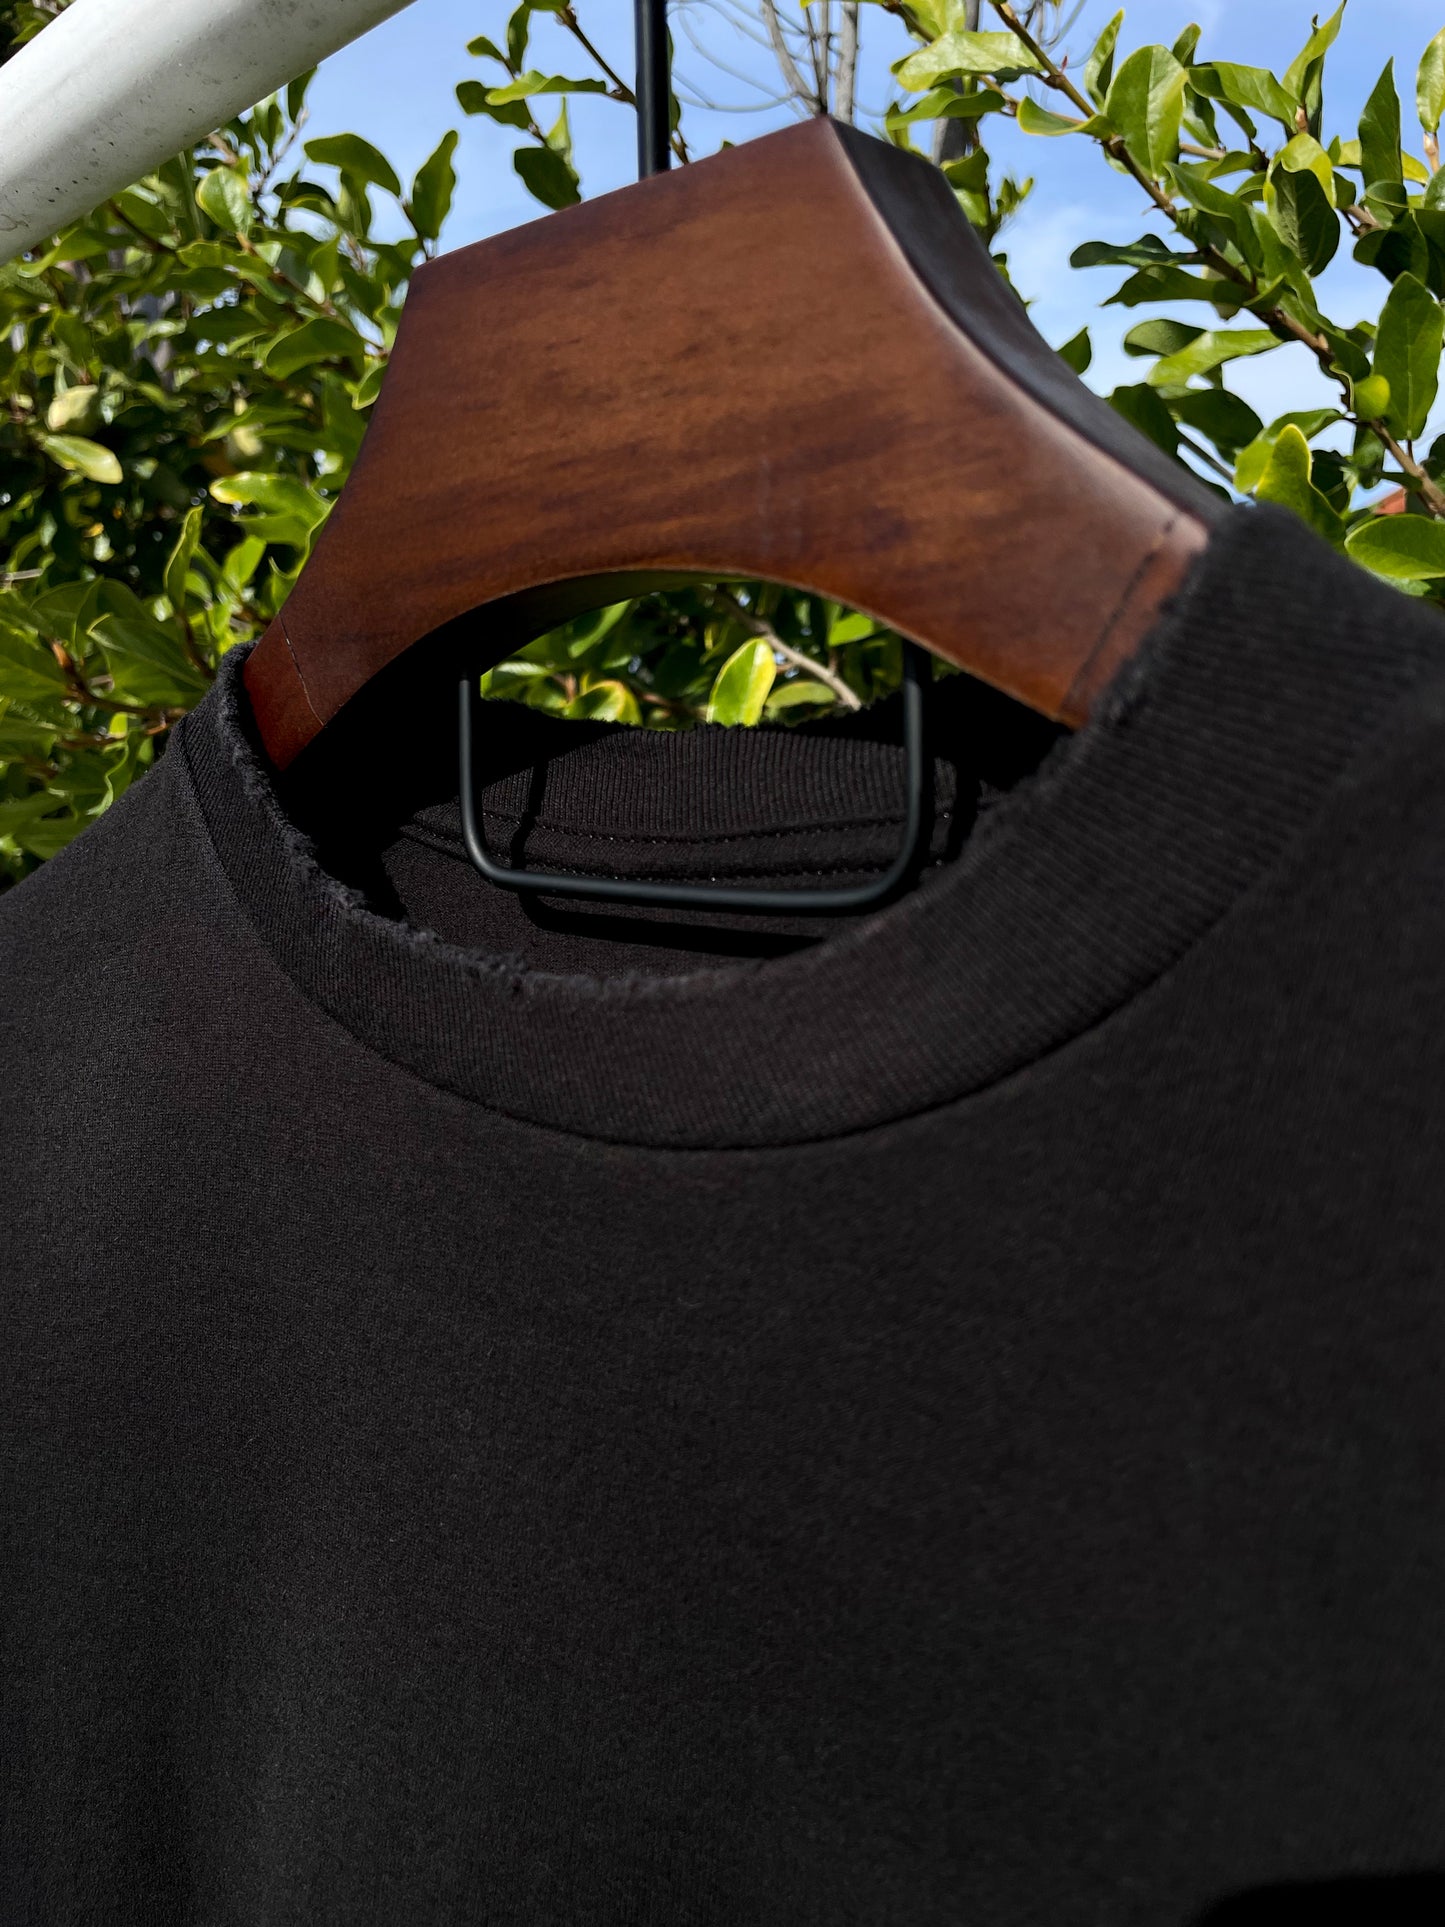 Sixelar distressed Long sleeve Black blank t-shirt rib detail